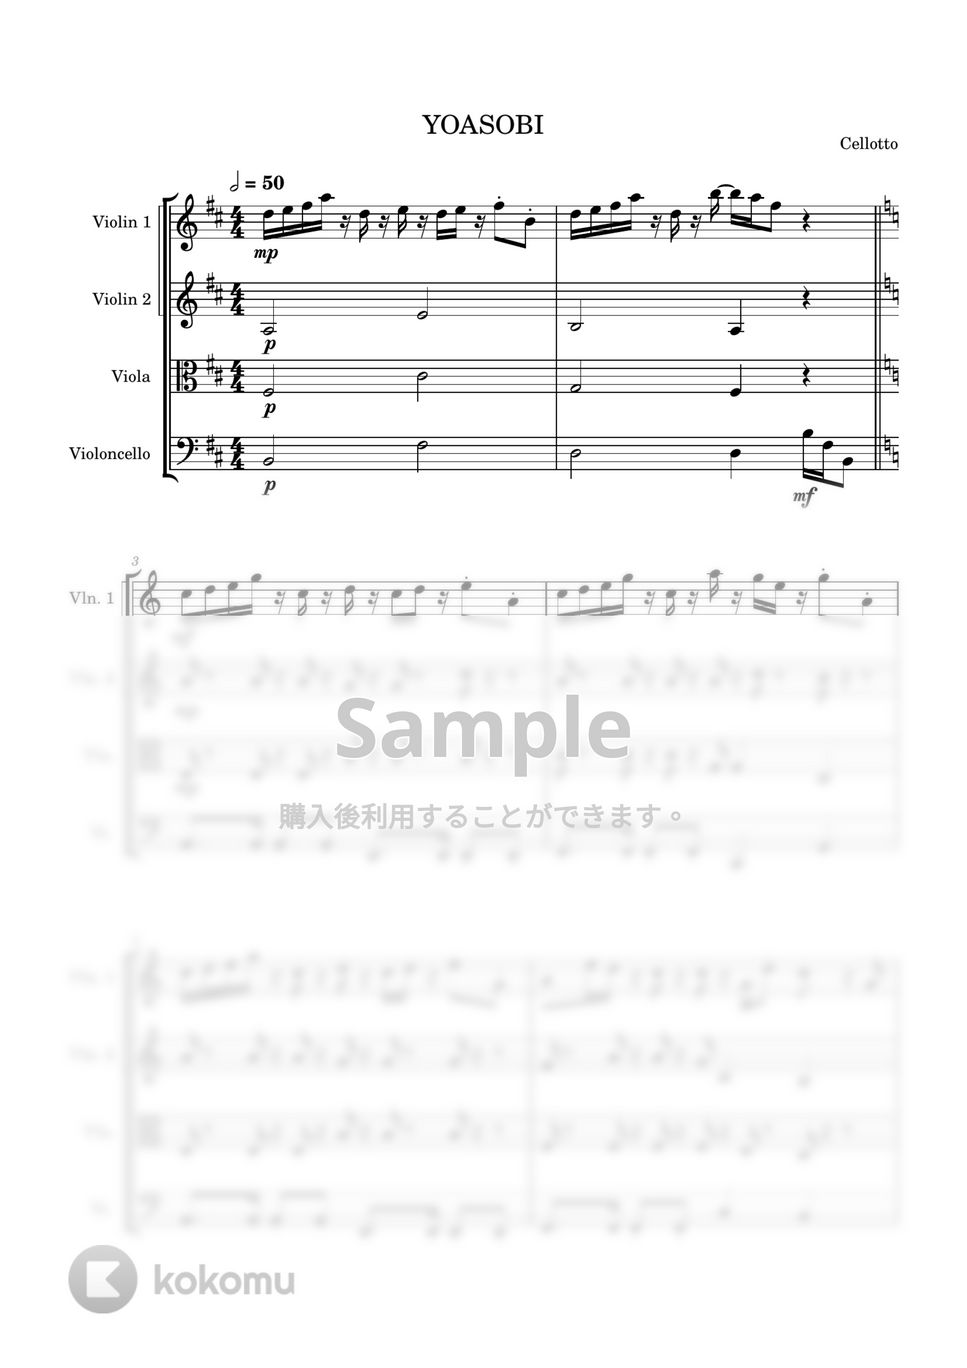 YOASOBI - ハルカ (弦楽四重奏) by Cellotto